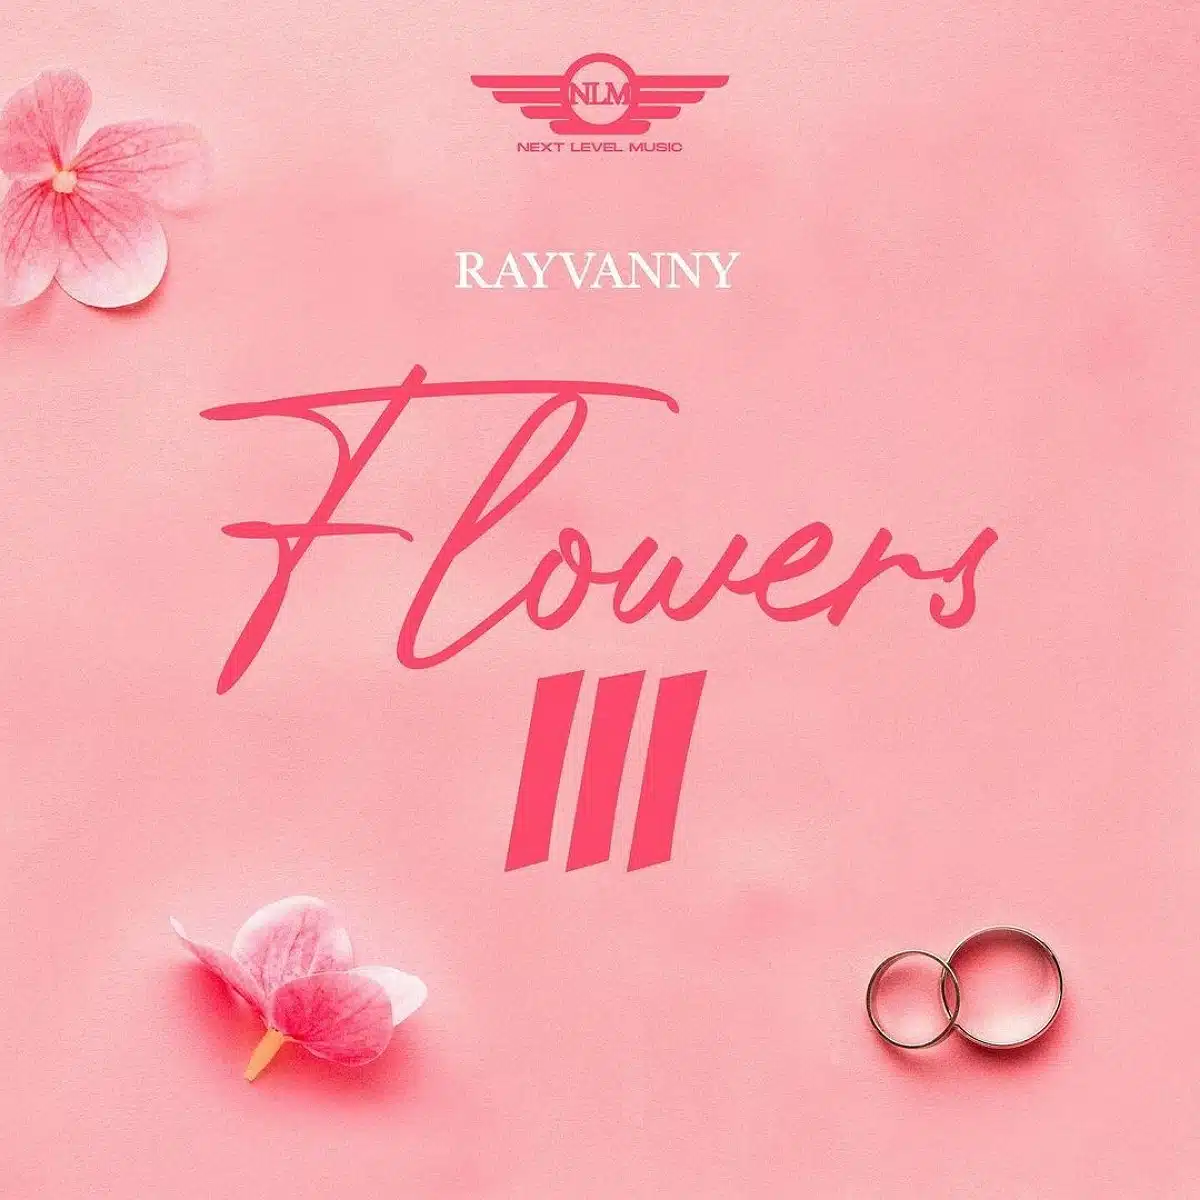 DOWNLOAD: Rayvanny – “Flowers III” | Full Album